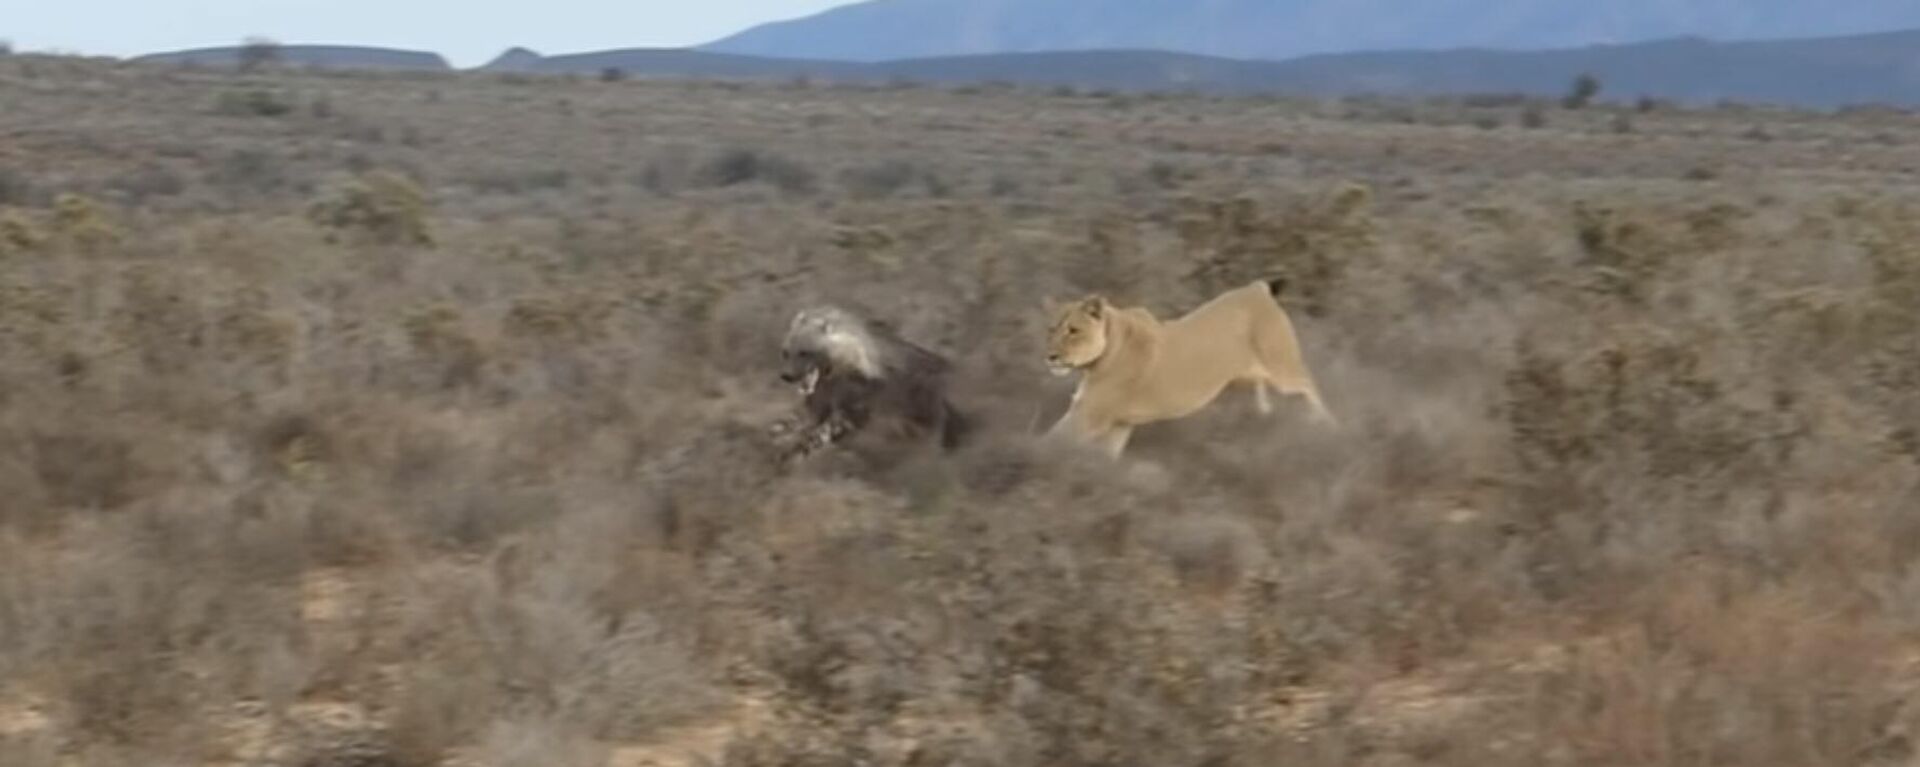 Una leona persigue a una hiena parda - Sputnik Mundo, 1920, 11.02.2022